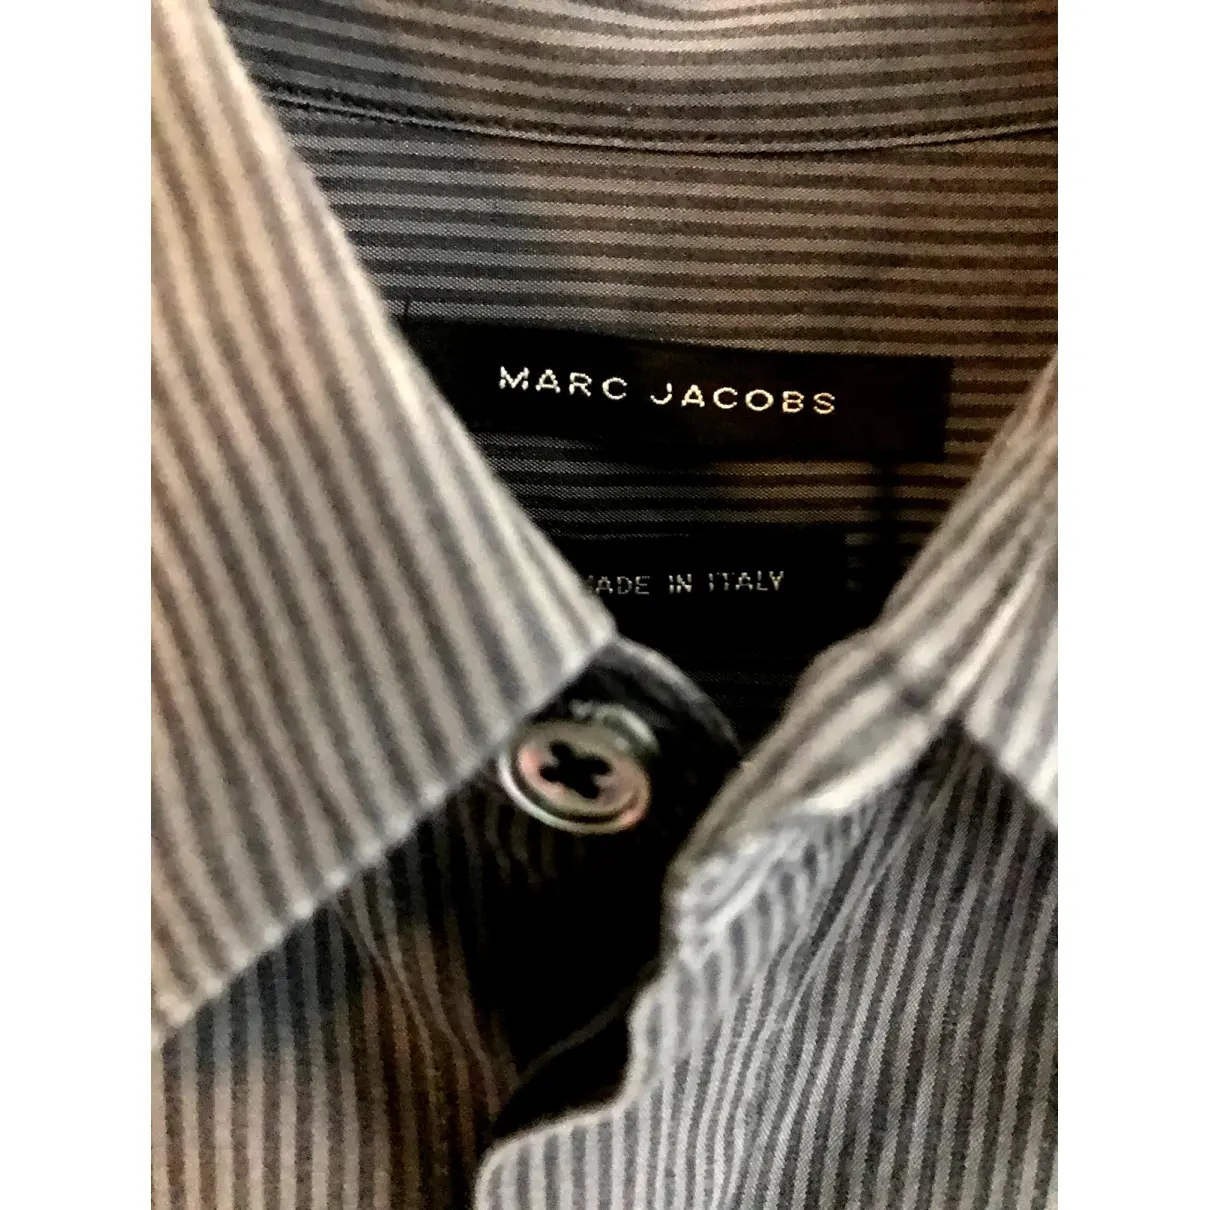 Buy Marc Jacobs Shirt online